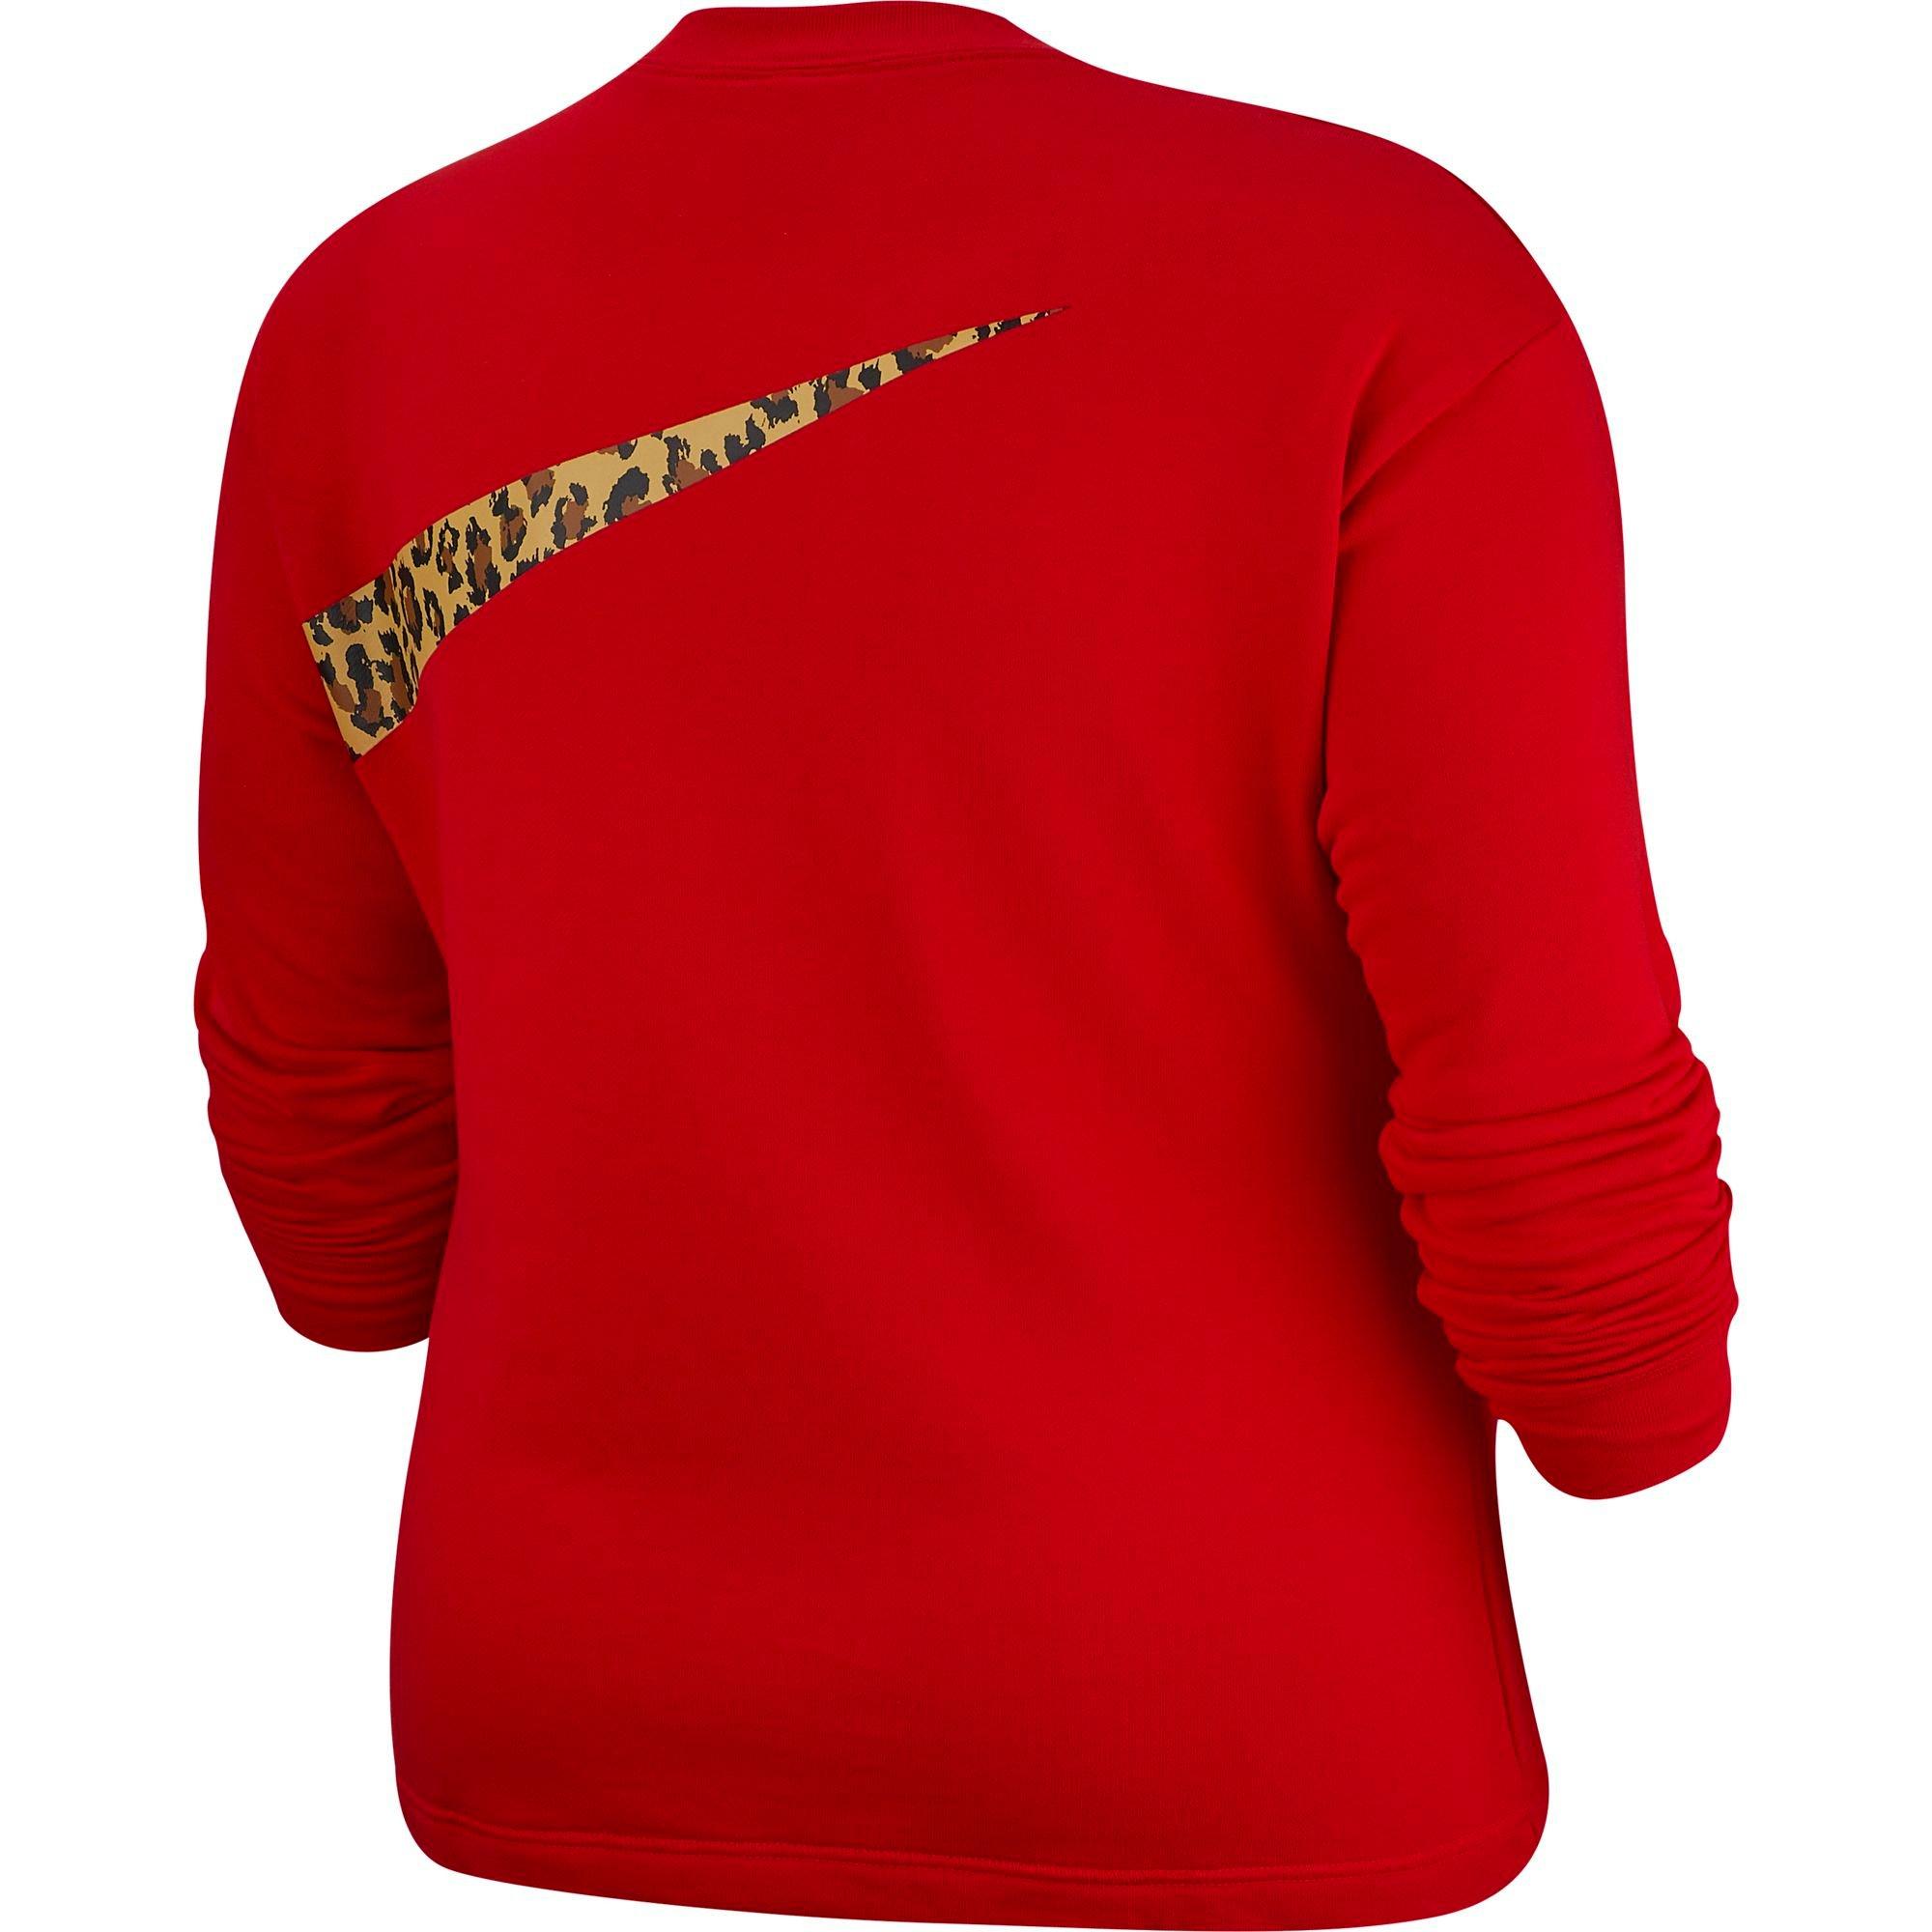 nike red leopard print shirt